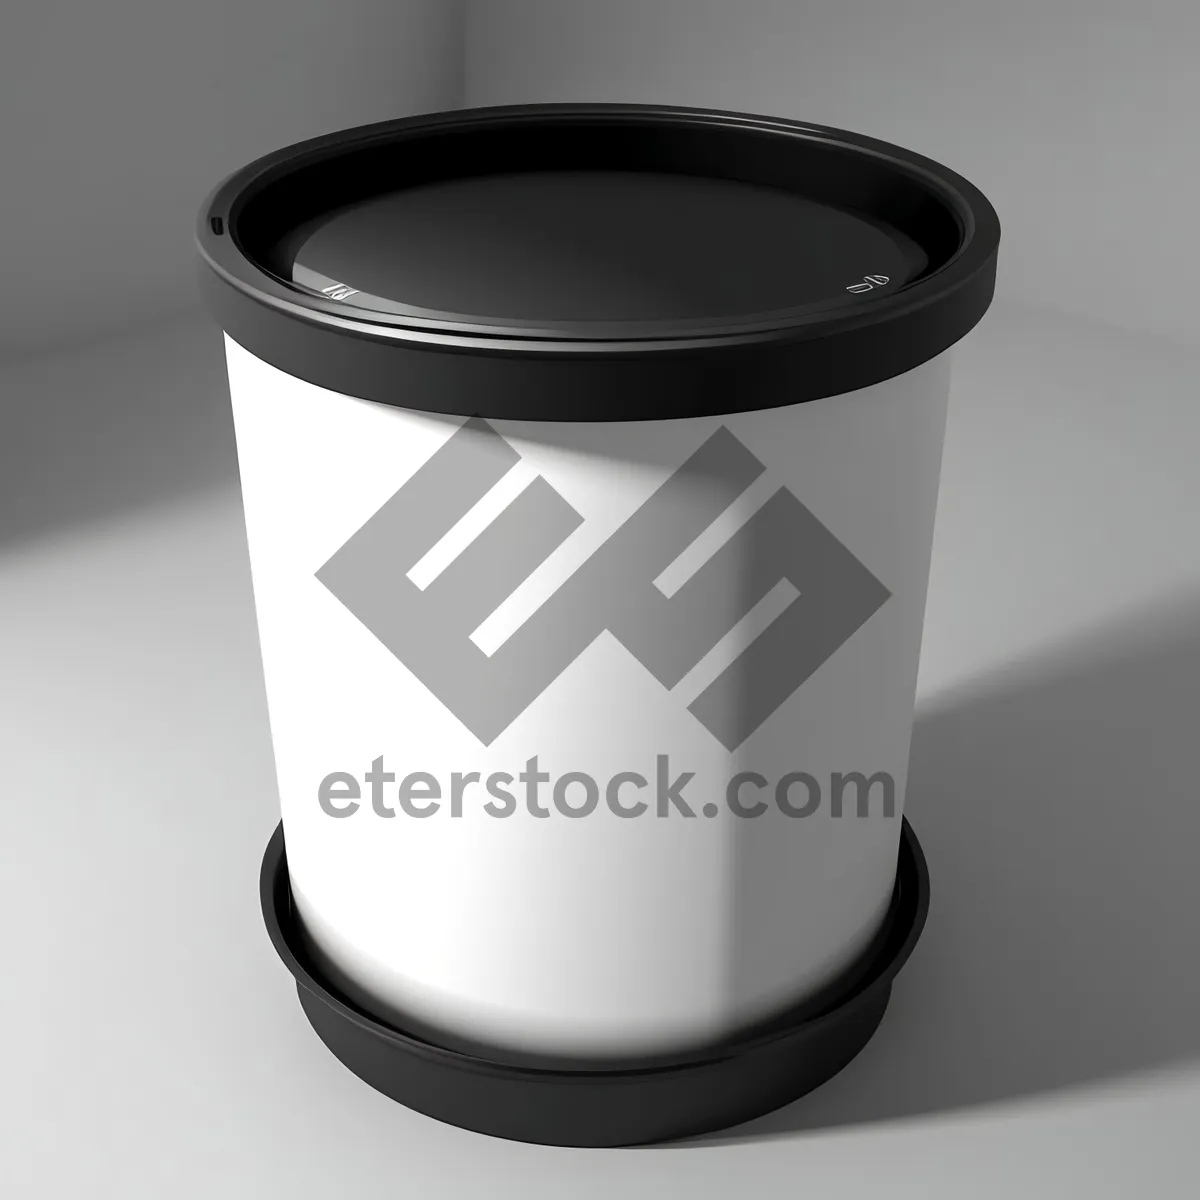 Picture of Black Coffee Mug on Breakfast Table